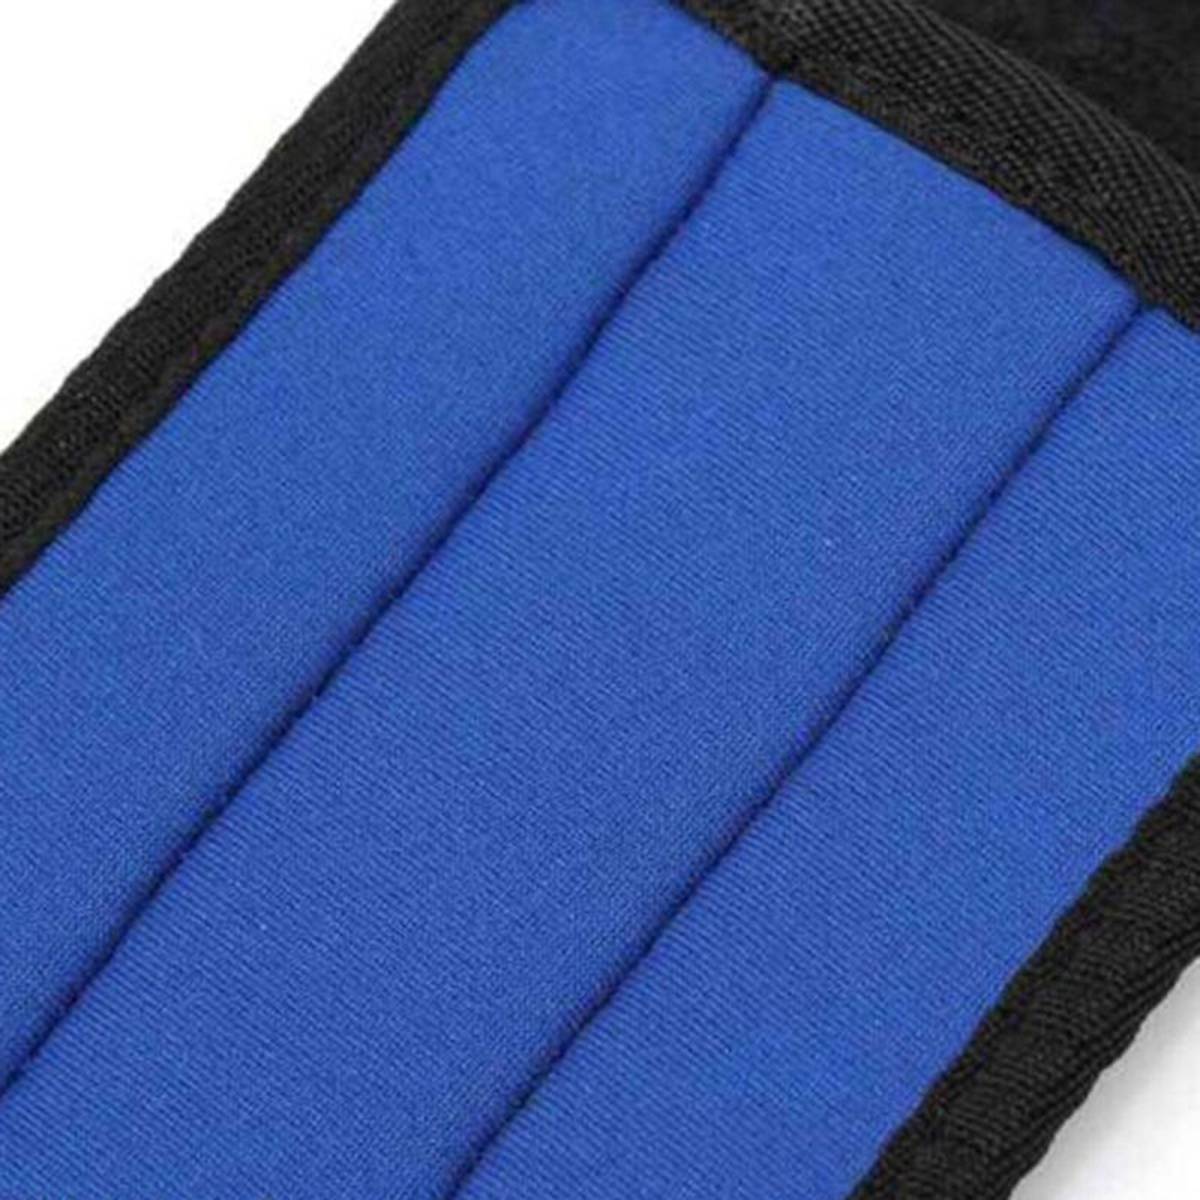 Adjustable Gym Ankle Strap Workout accessories color: Black|Blue